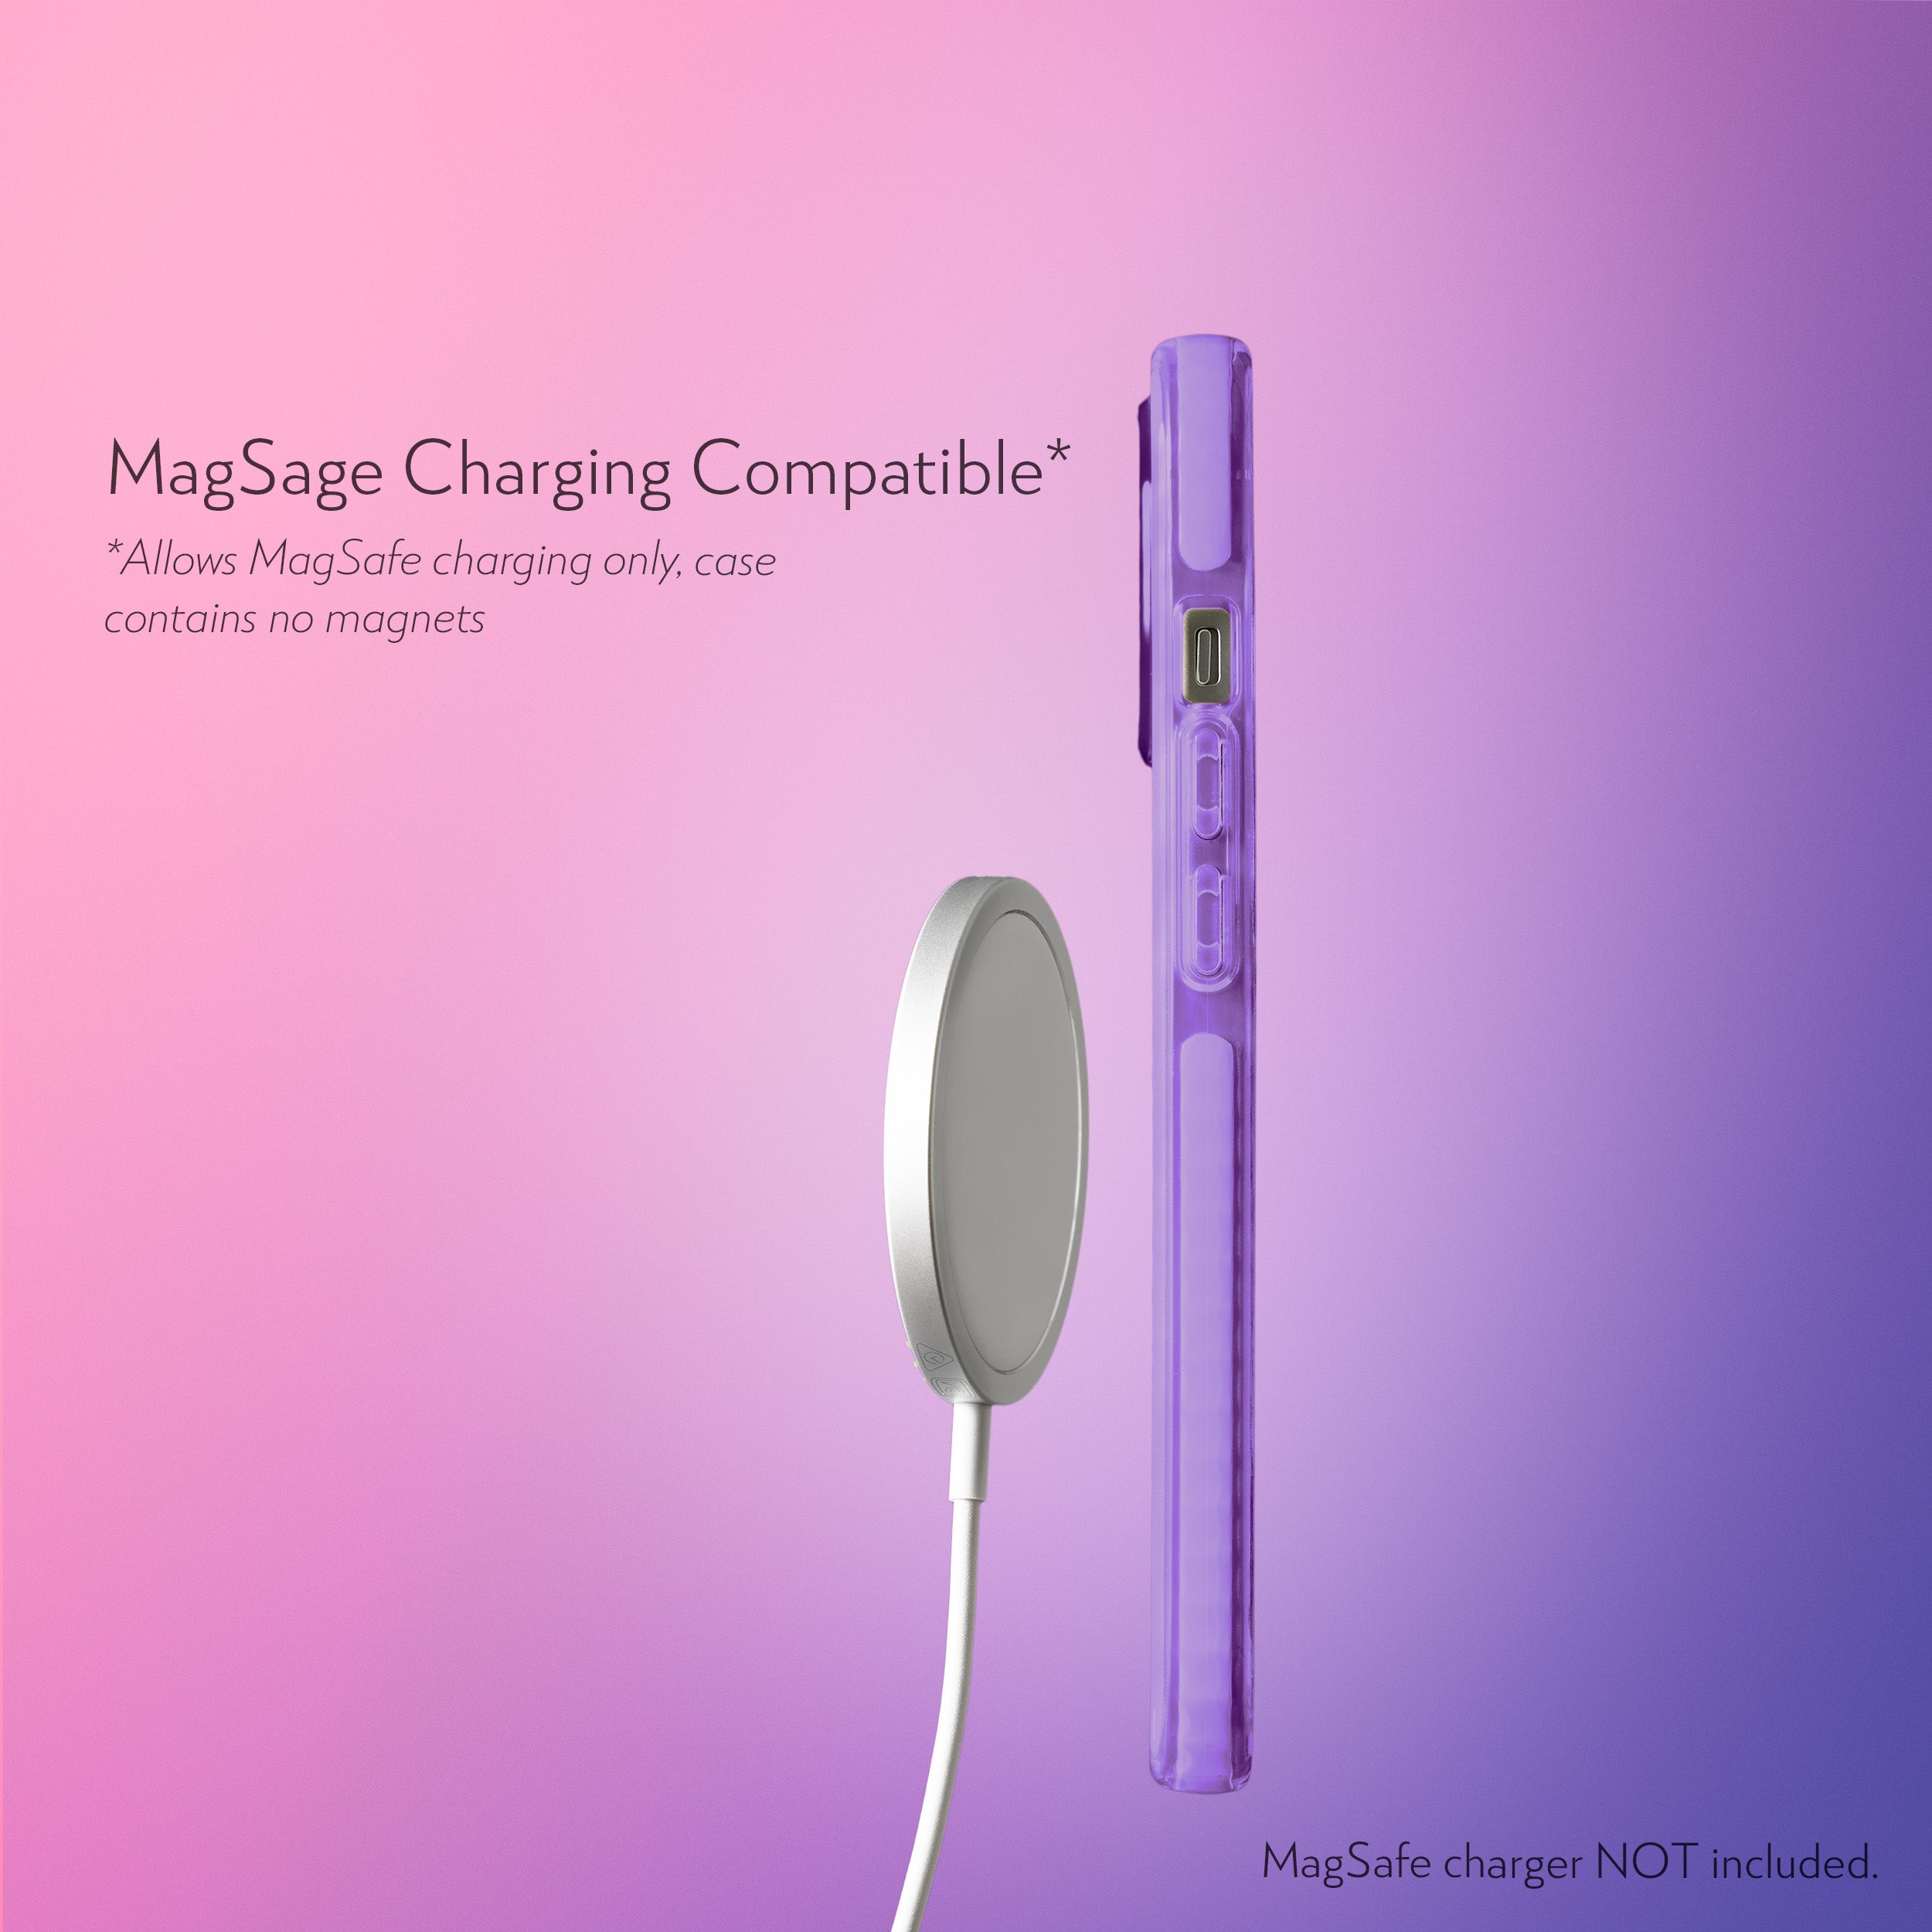 Barrier Case for iPhone 13 - Fresh Purple Lavender